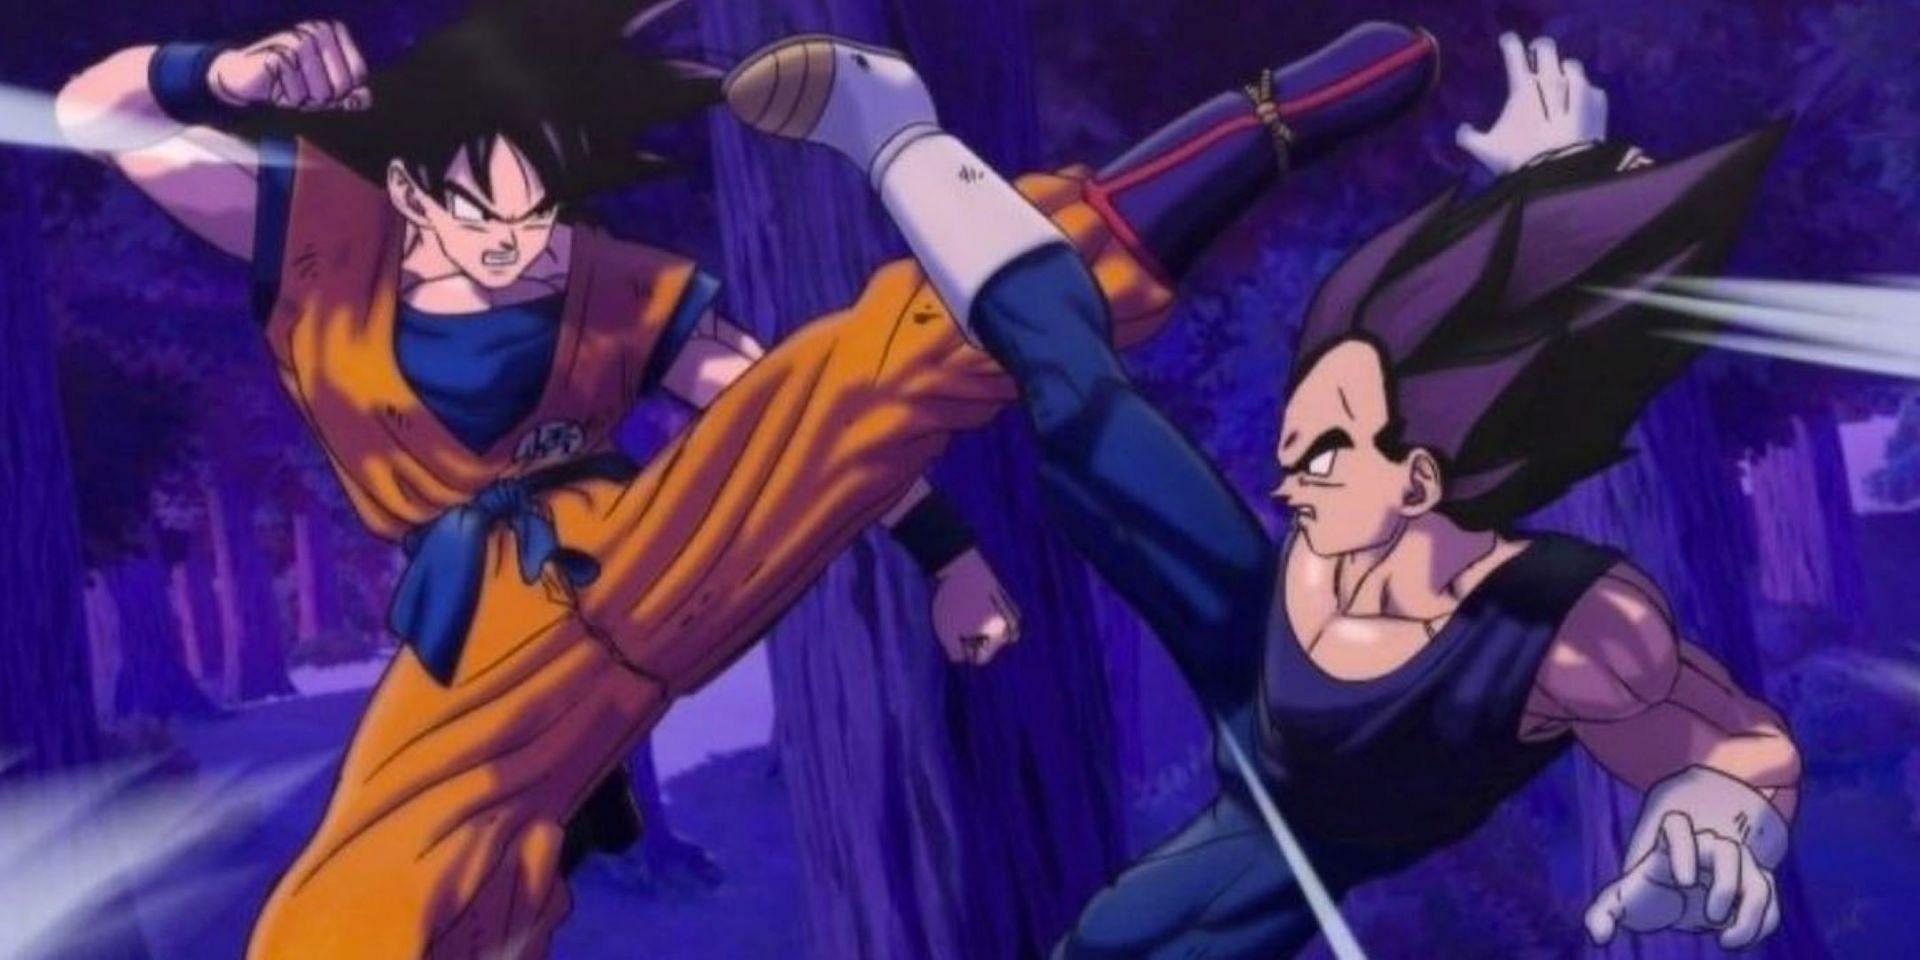 Goku vs. Vegeta in the film (Image via Toei ANimation)